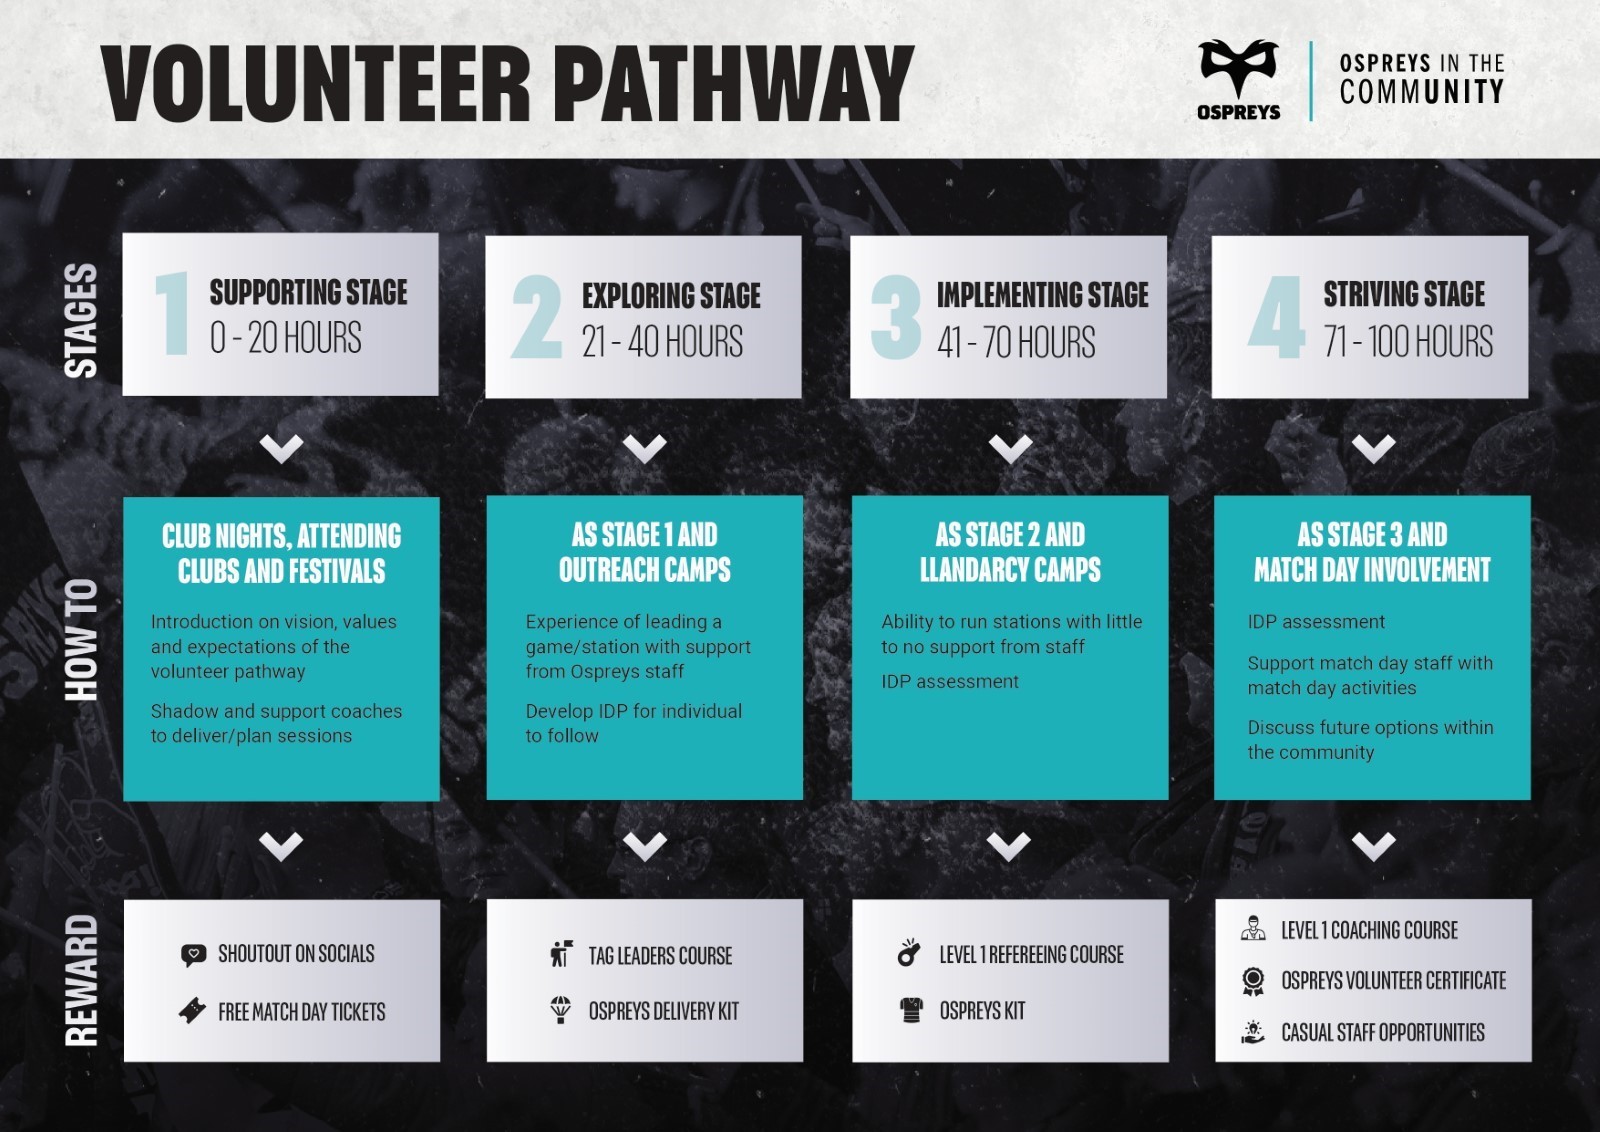 Ospreys Volunteering Pathway